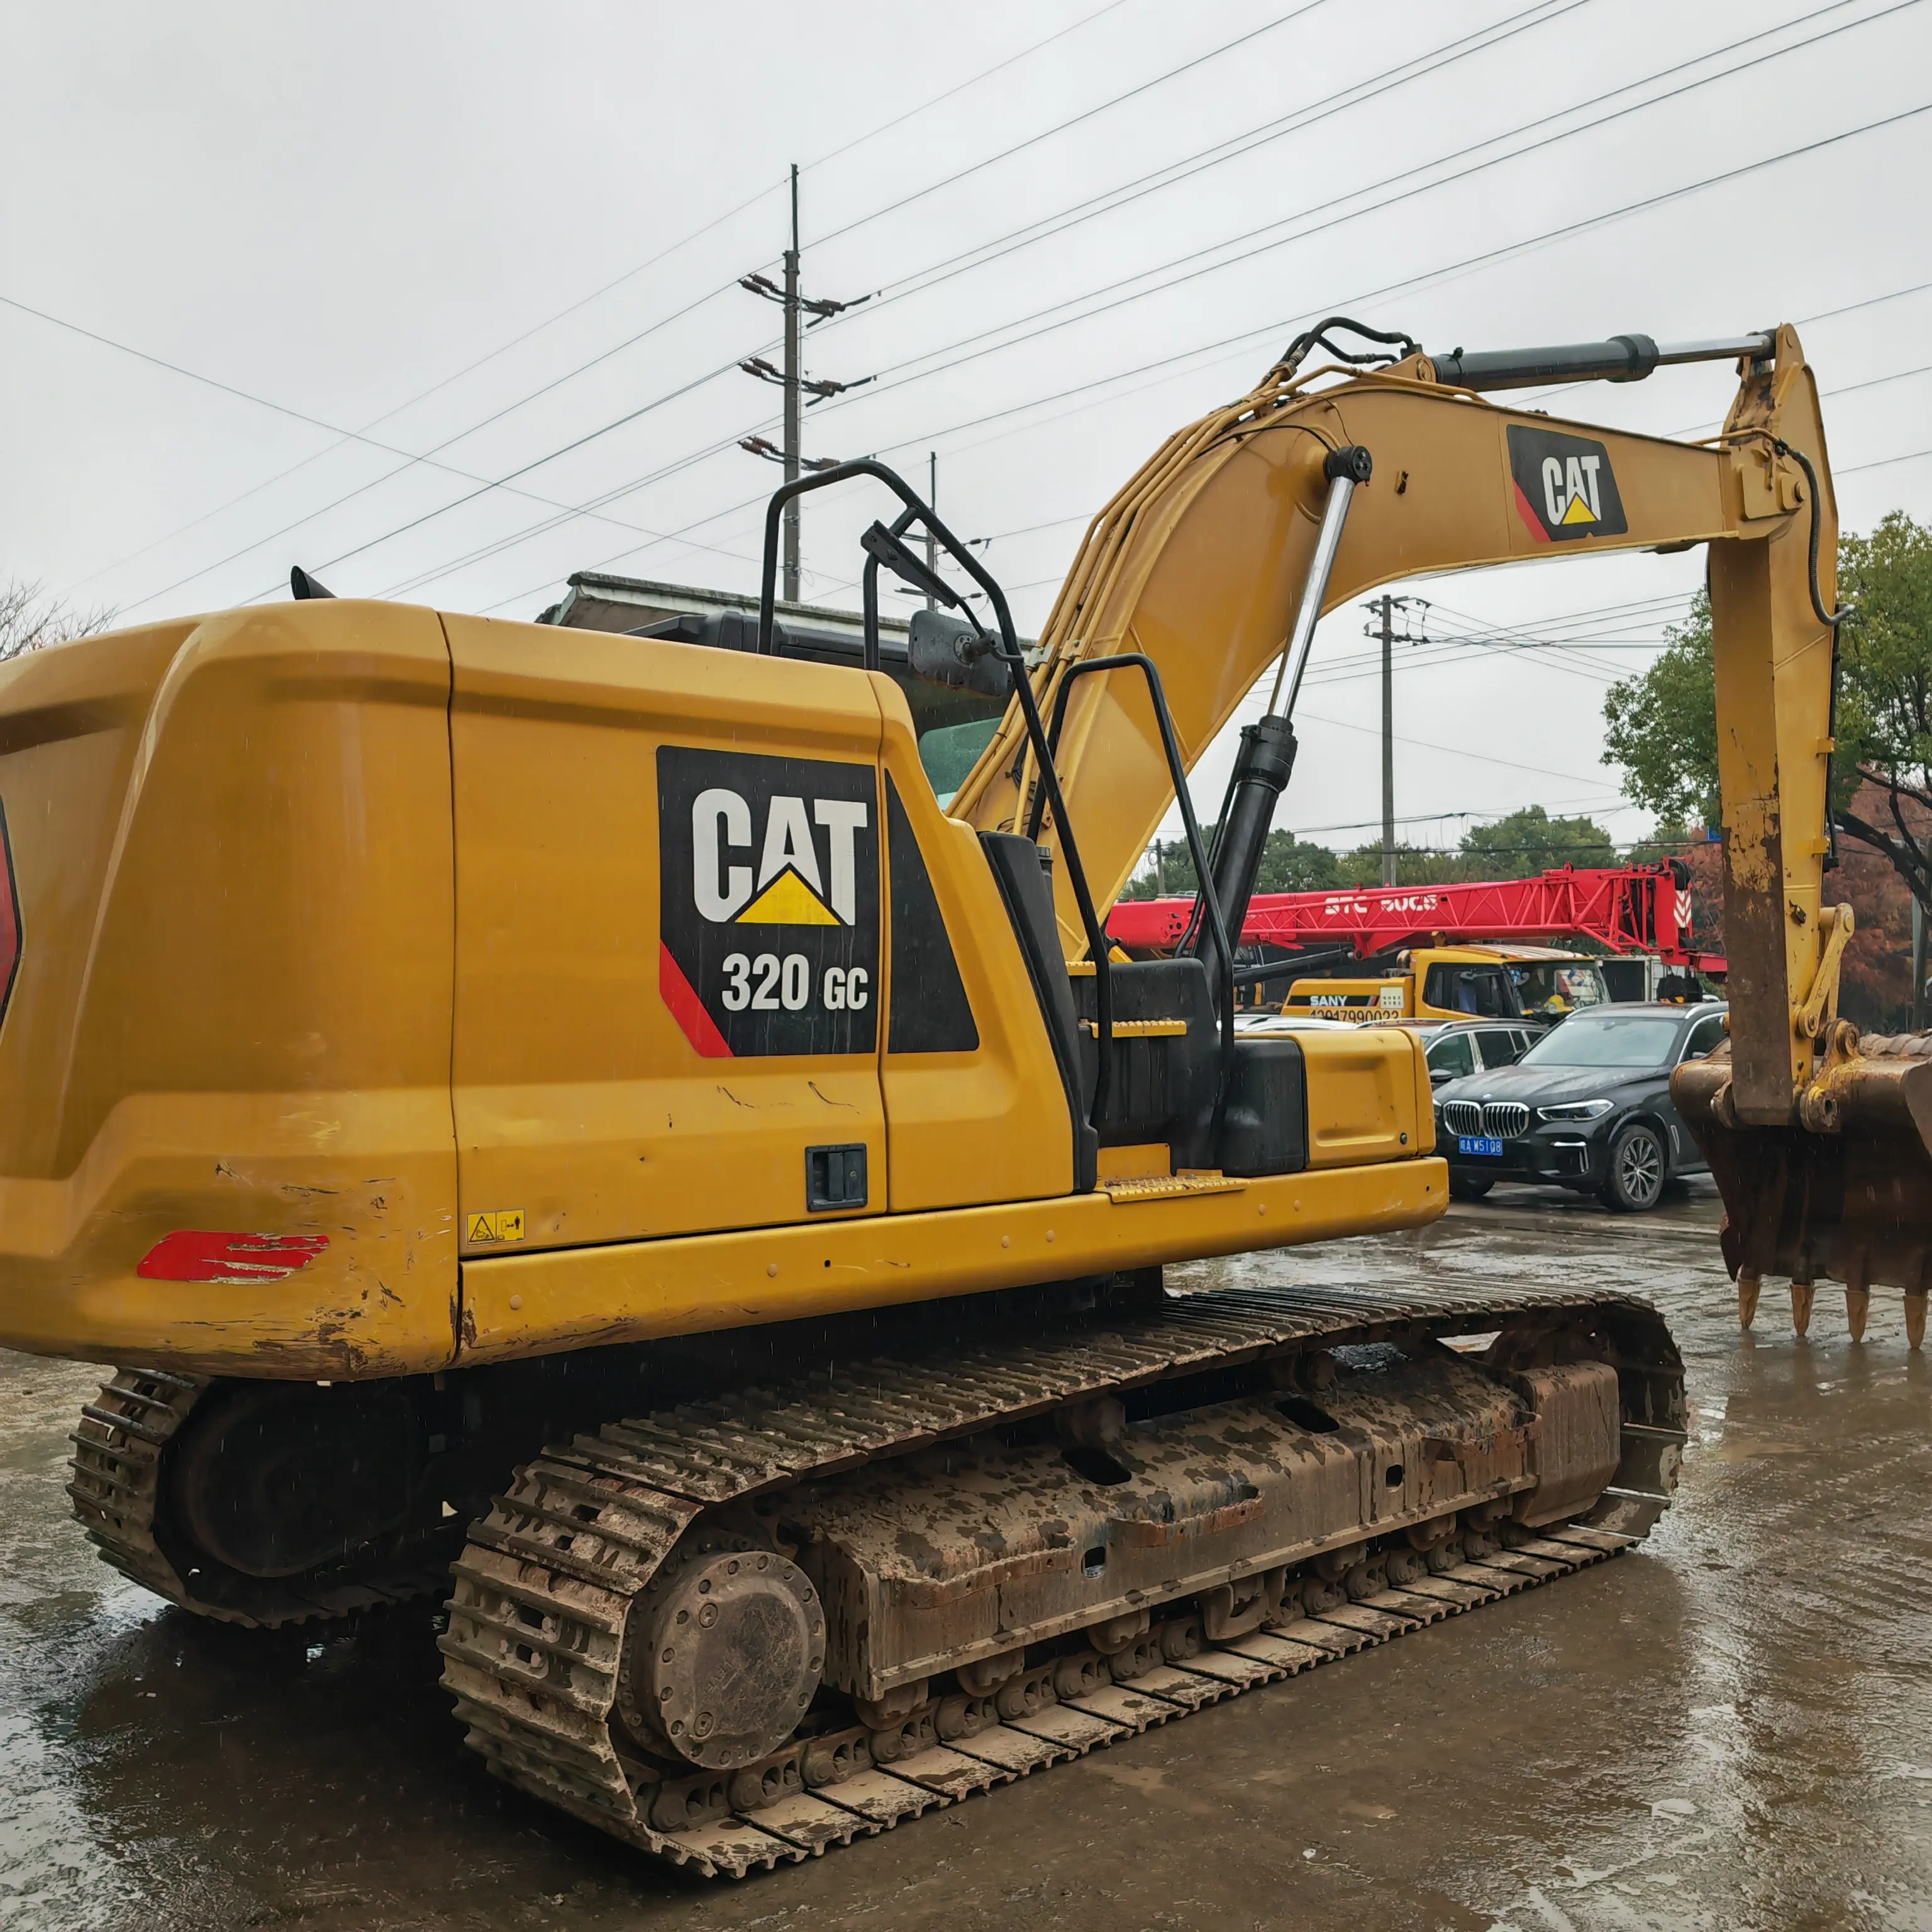 Escavadeira CAT320GC barata Caterpillar 320 Gc Modelo 2020 Preço Cat320gc Escavadeira de esteira Cat320gc usada